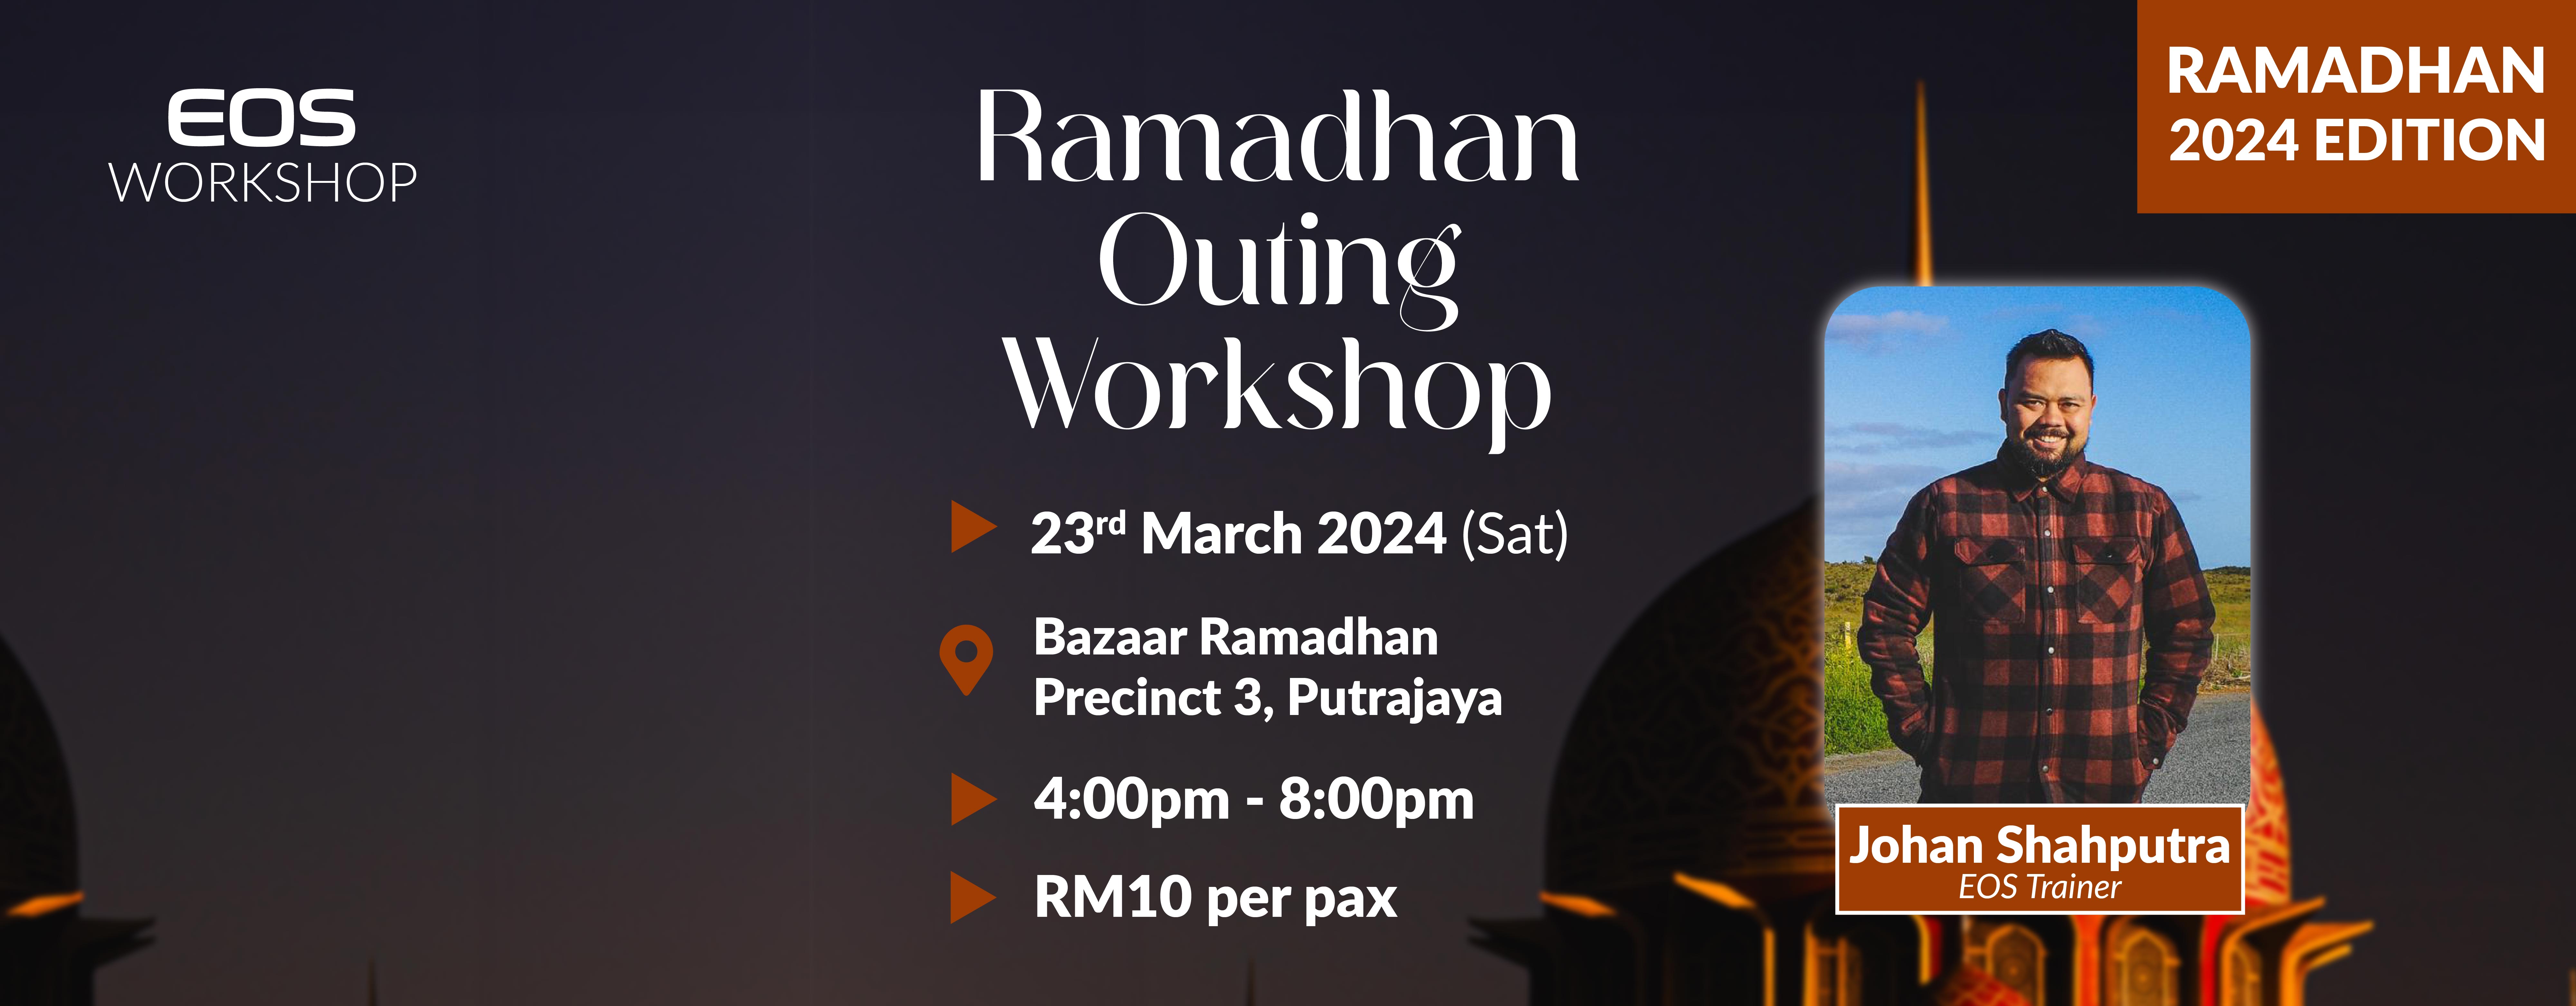 JohanShahputr_Ramadhan Outing Workshop_1920X750 IN 800.jpg